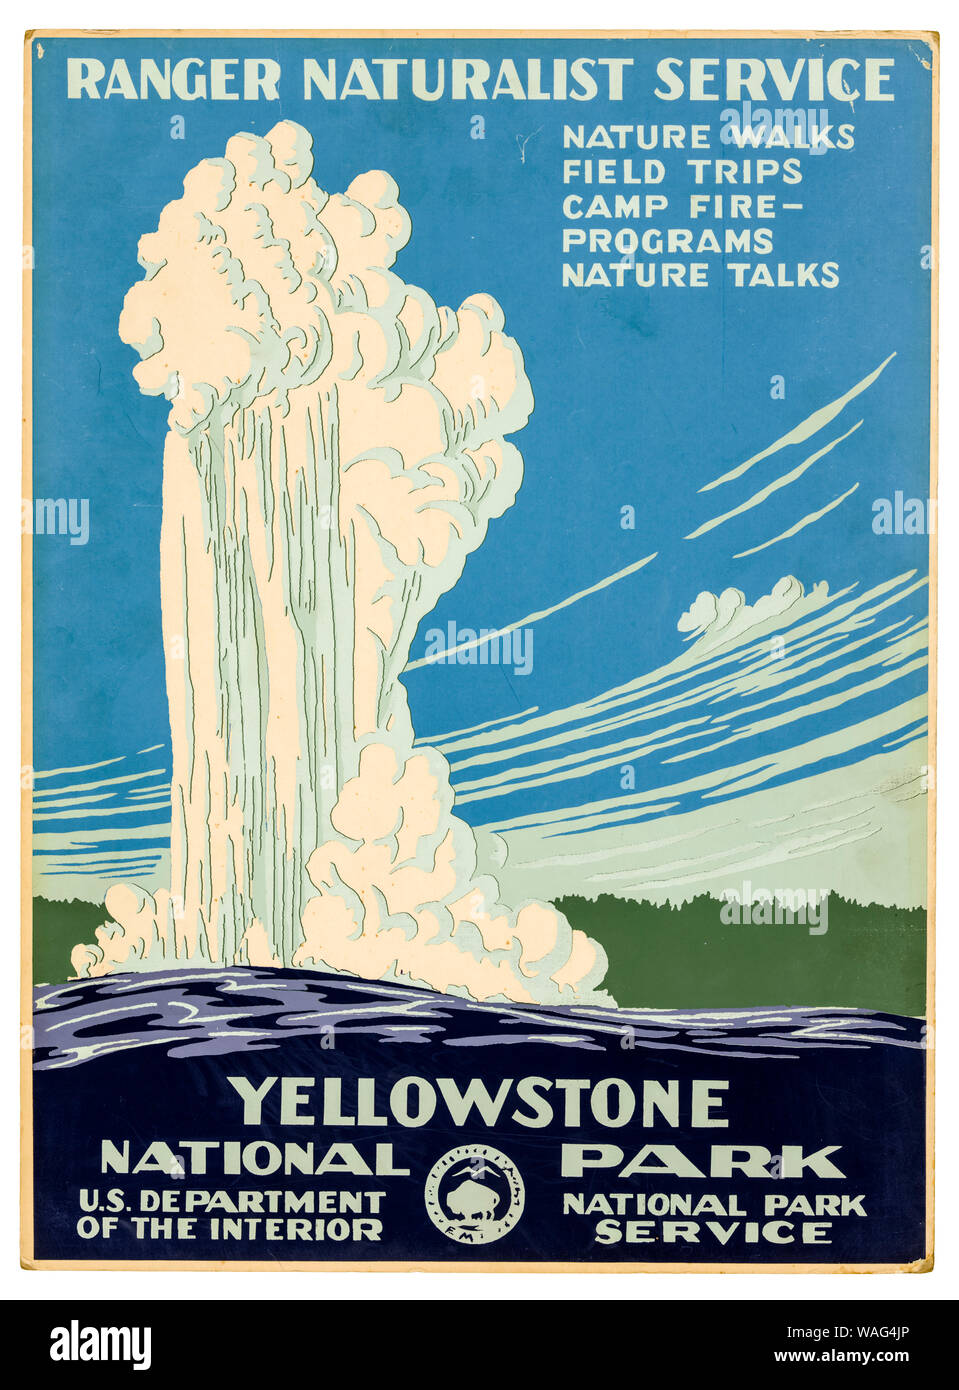 Vintage travel poster, Yellowstone National Park, Ranger Naturalist Service, Old Faithful Geyser, circa 1938, 1930s Stock Photo